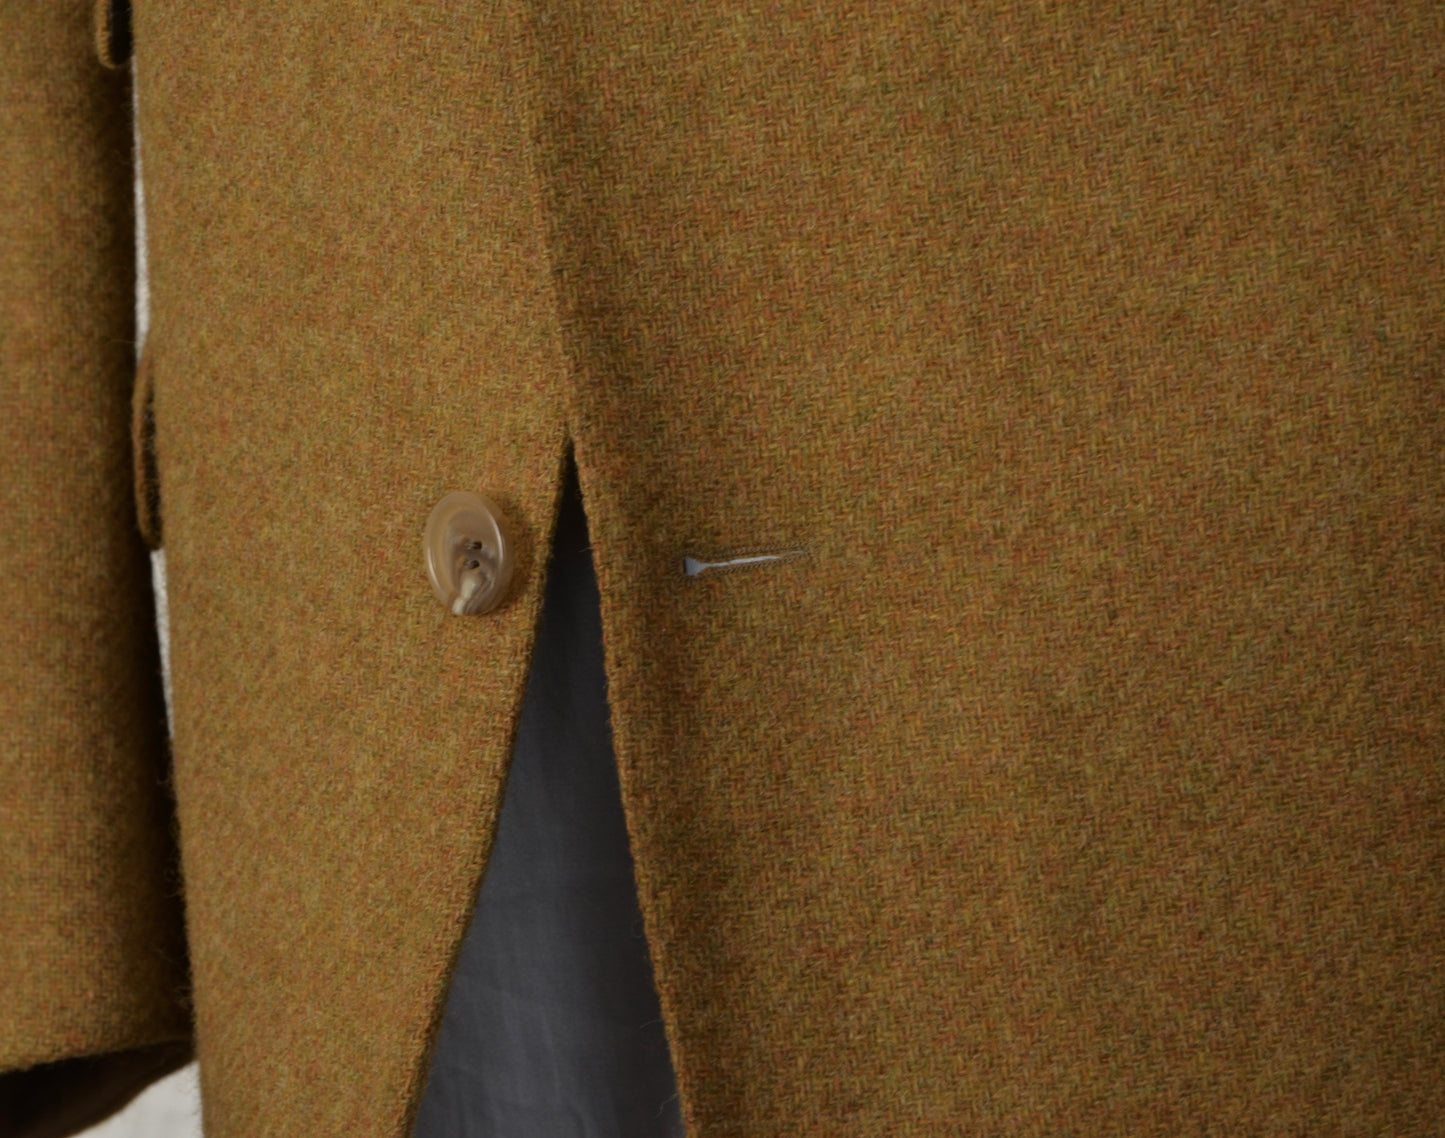 Burberrys Tweed Jacket Size 26 52 Short - Mustard